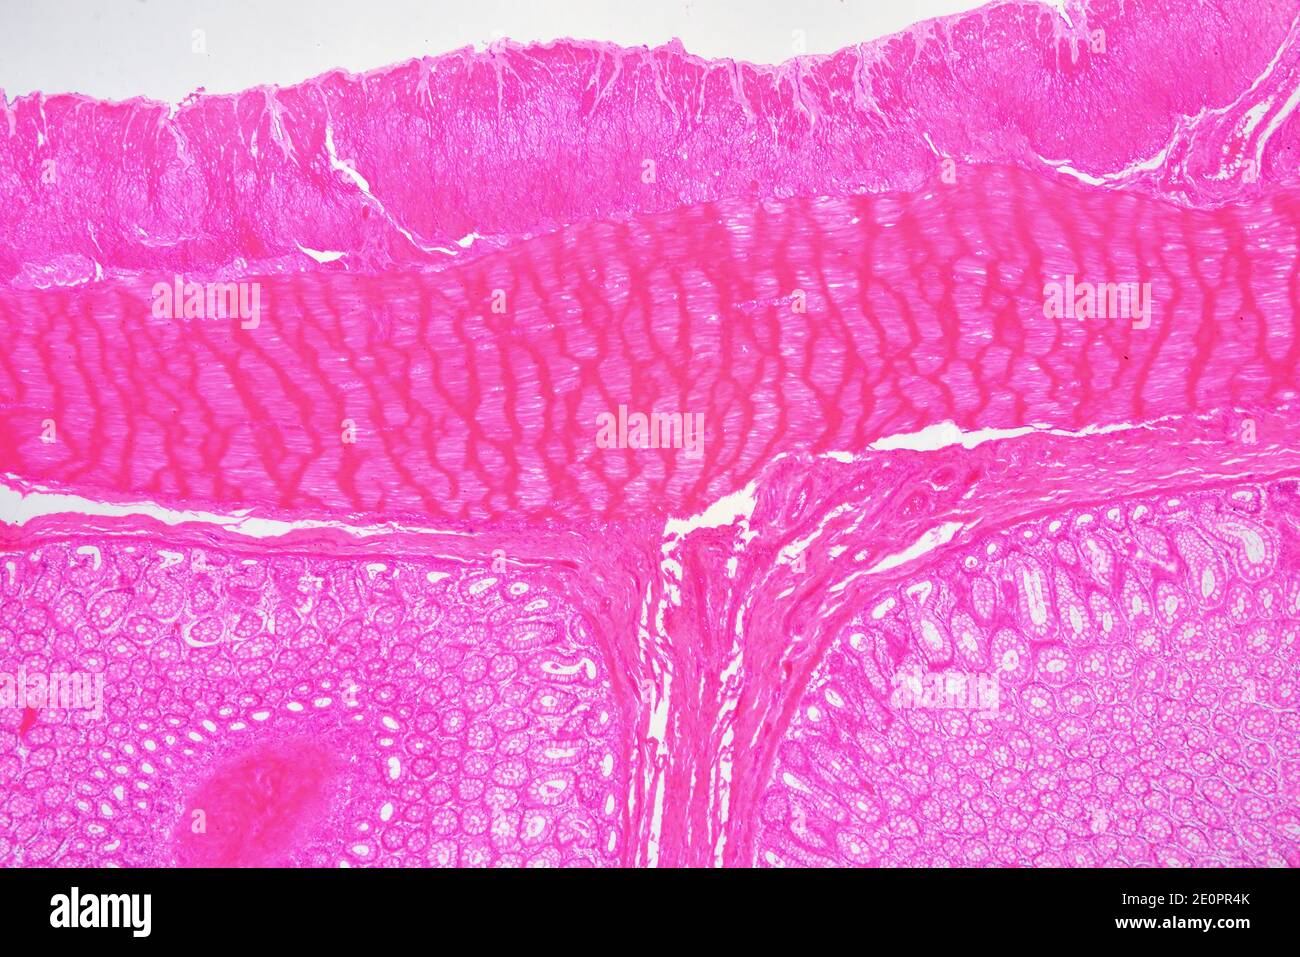 Intestino grueso humano (colon) mostrando de arriba a abajo: Capas musculares, submucosa y mucosa con criptas de Lieberkhun. X25 a 10 cm de ancho. Foto de stock